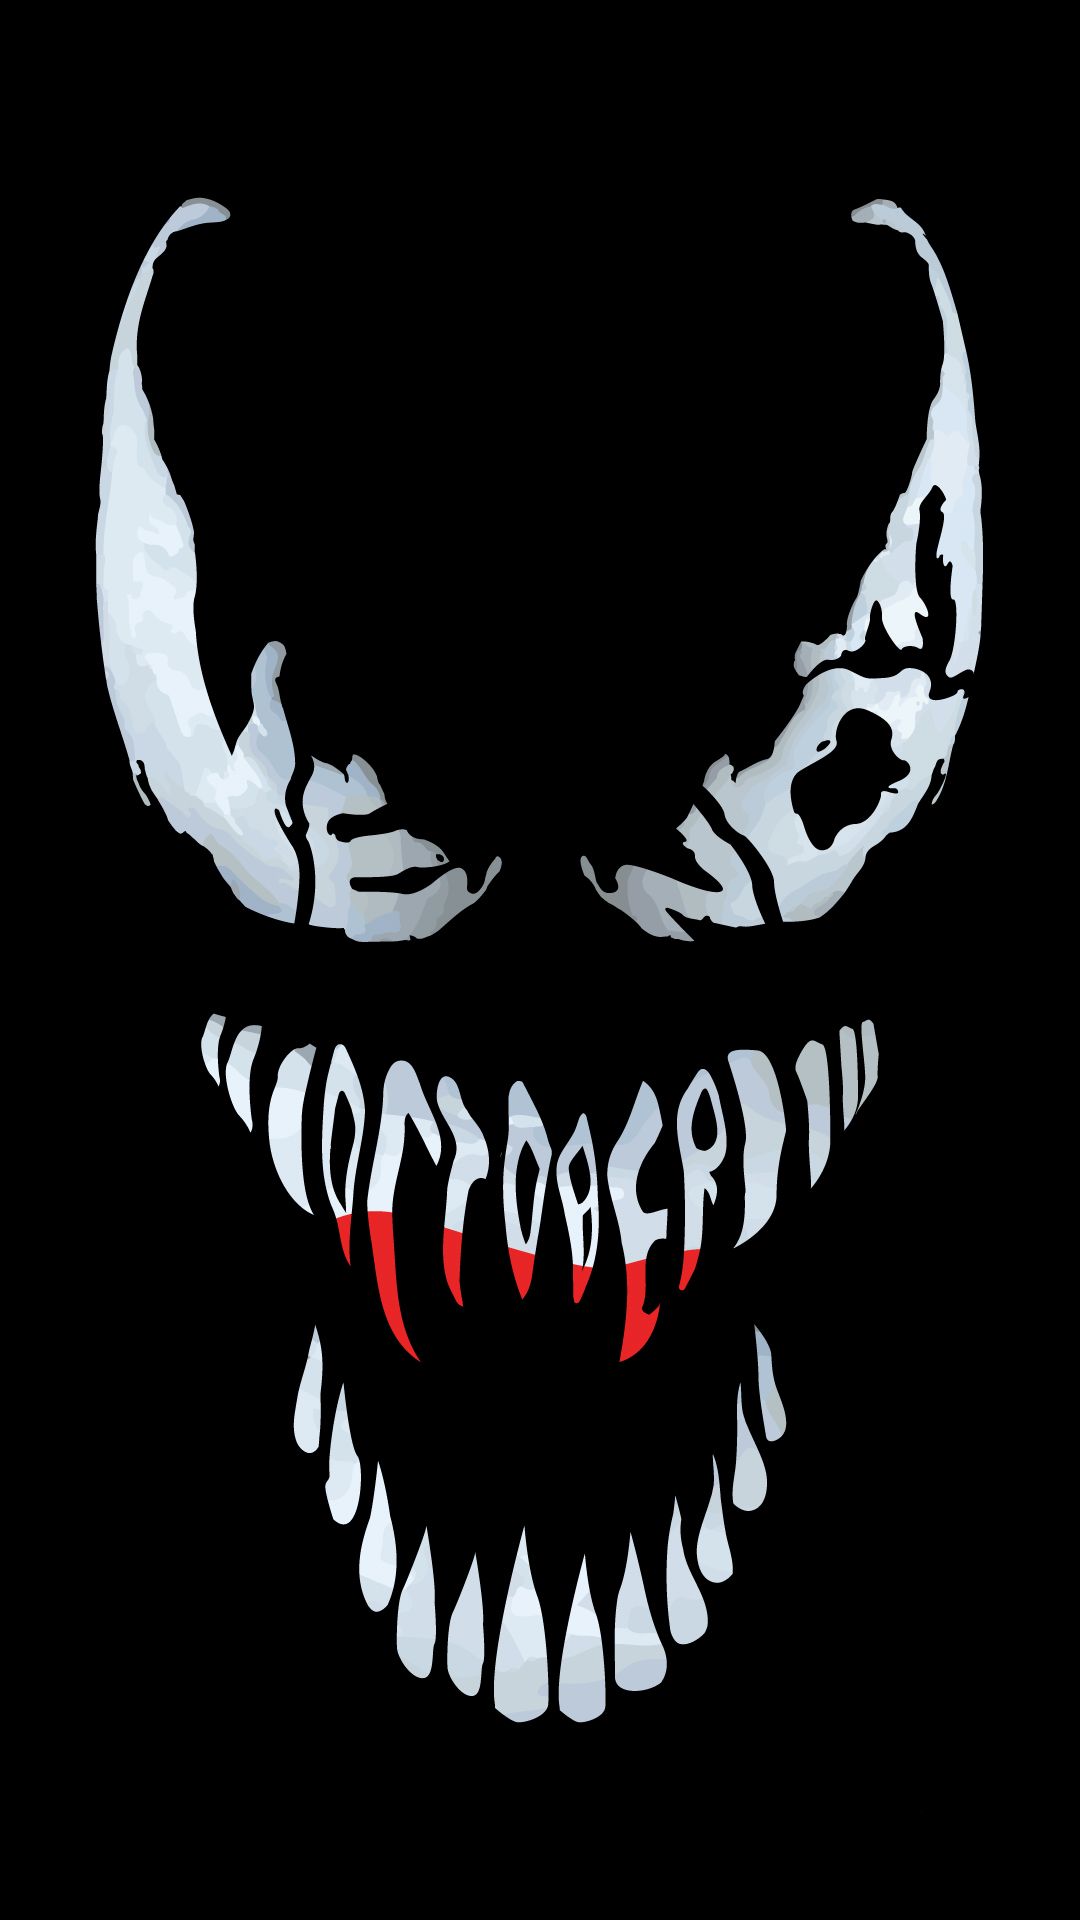 Venom typography logo Wallpaper1080 .com